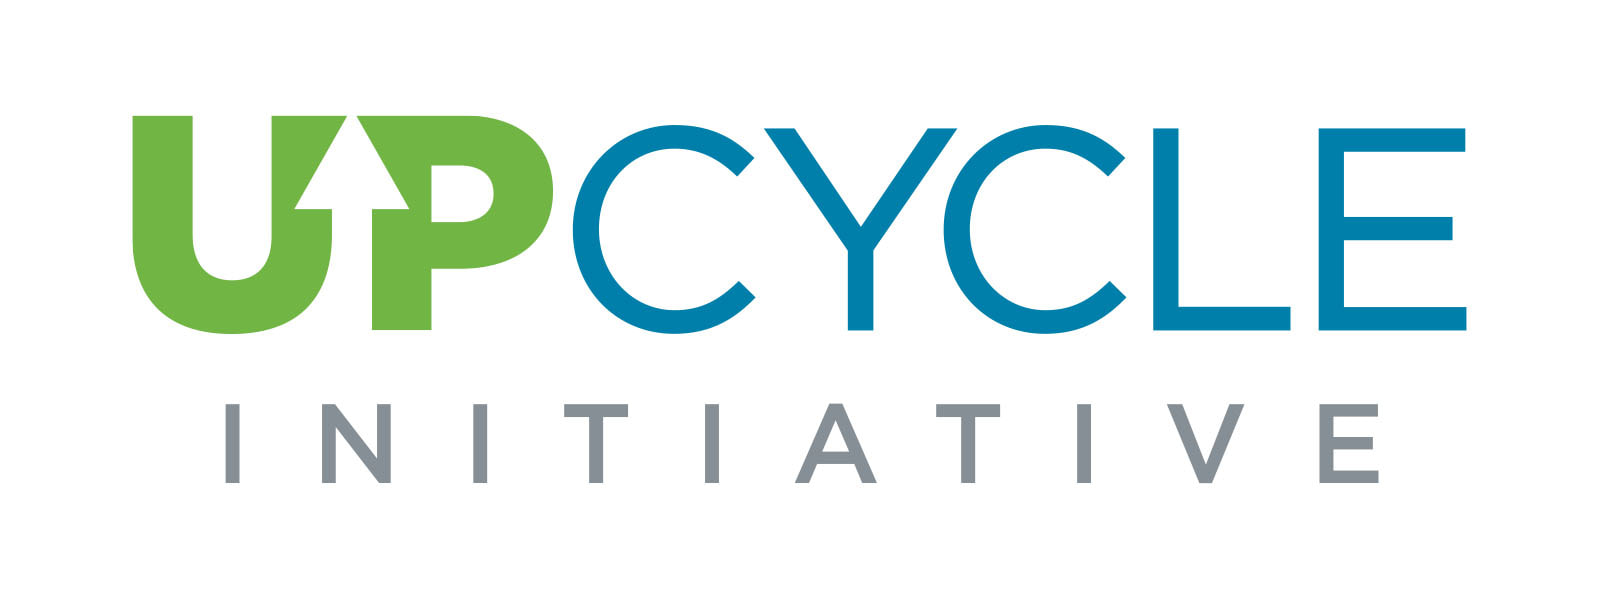 Upcycle Initiatve Logo